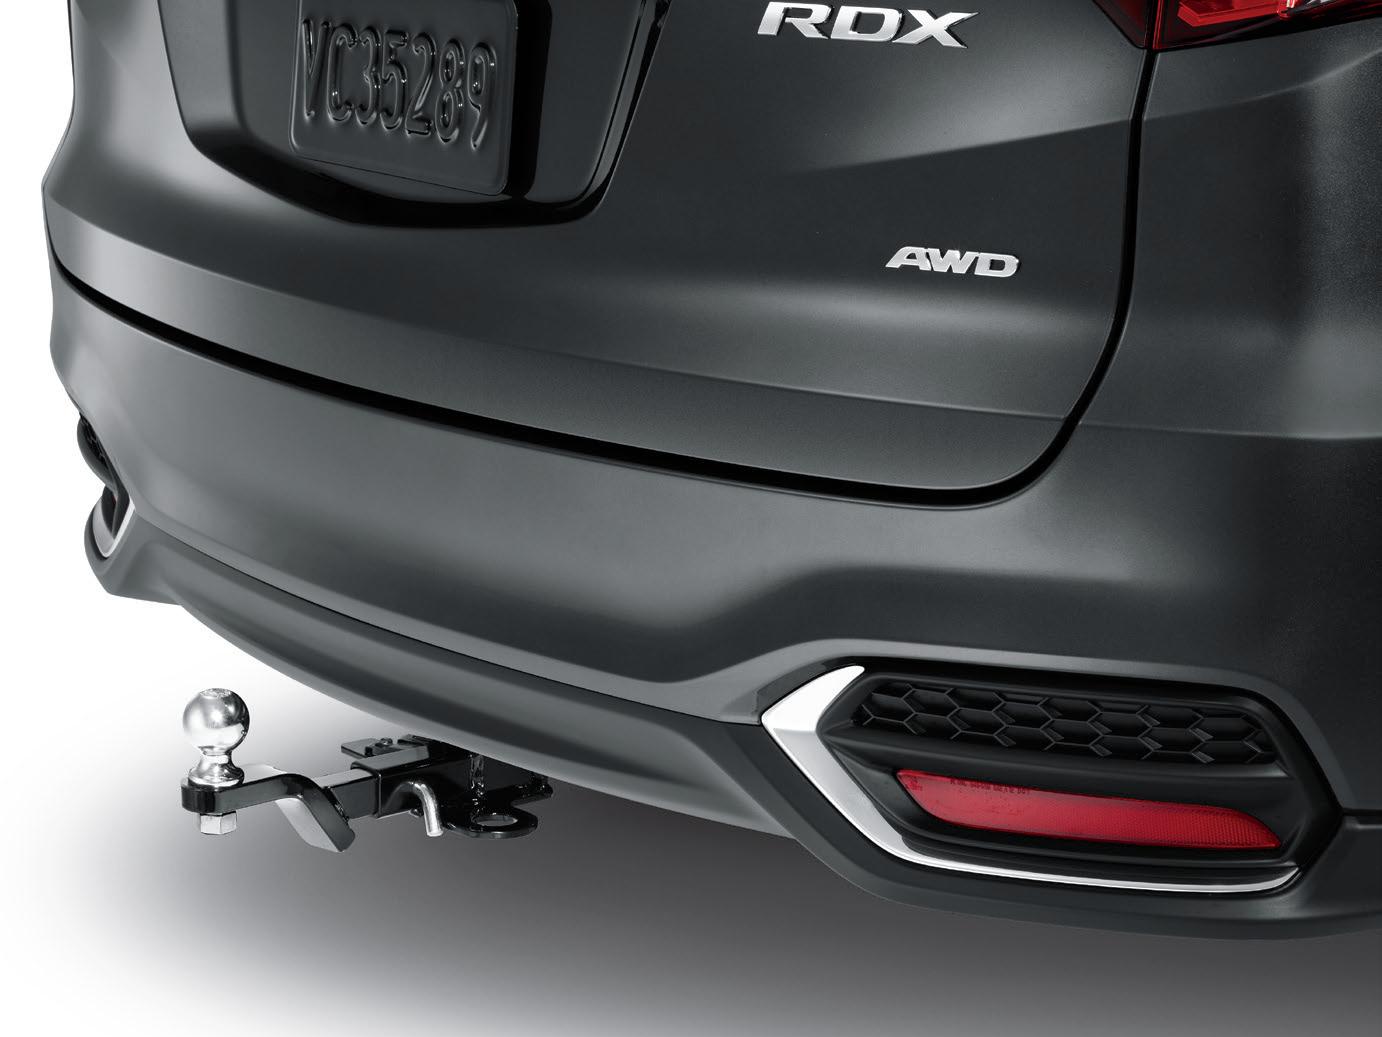 2016 Acura RDX Trailer Hitch 08L92-TX4-200